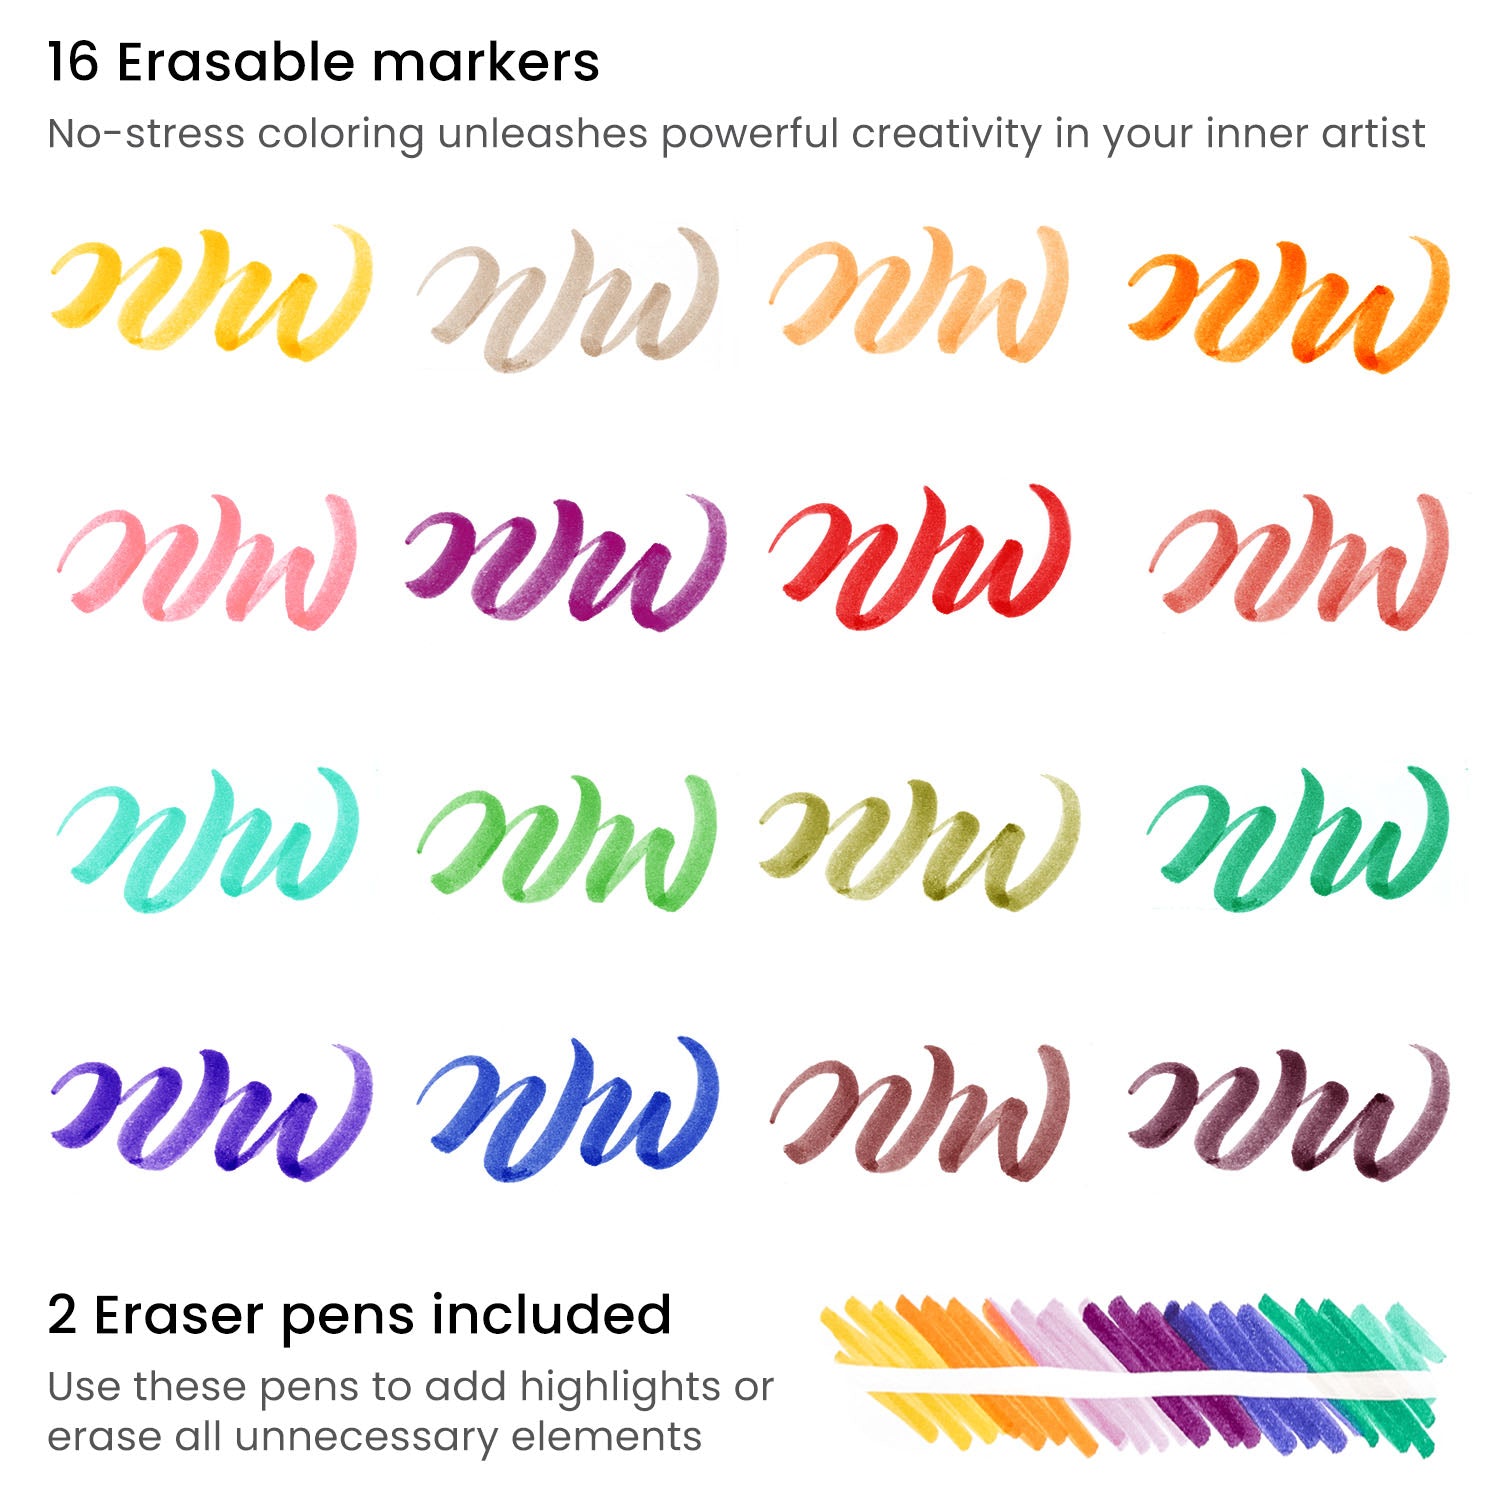 Wet erase markers - Zig Illumigraph 4PK colored assortment